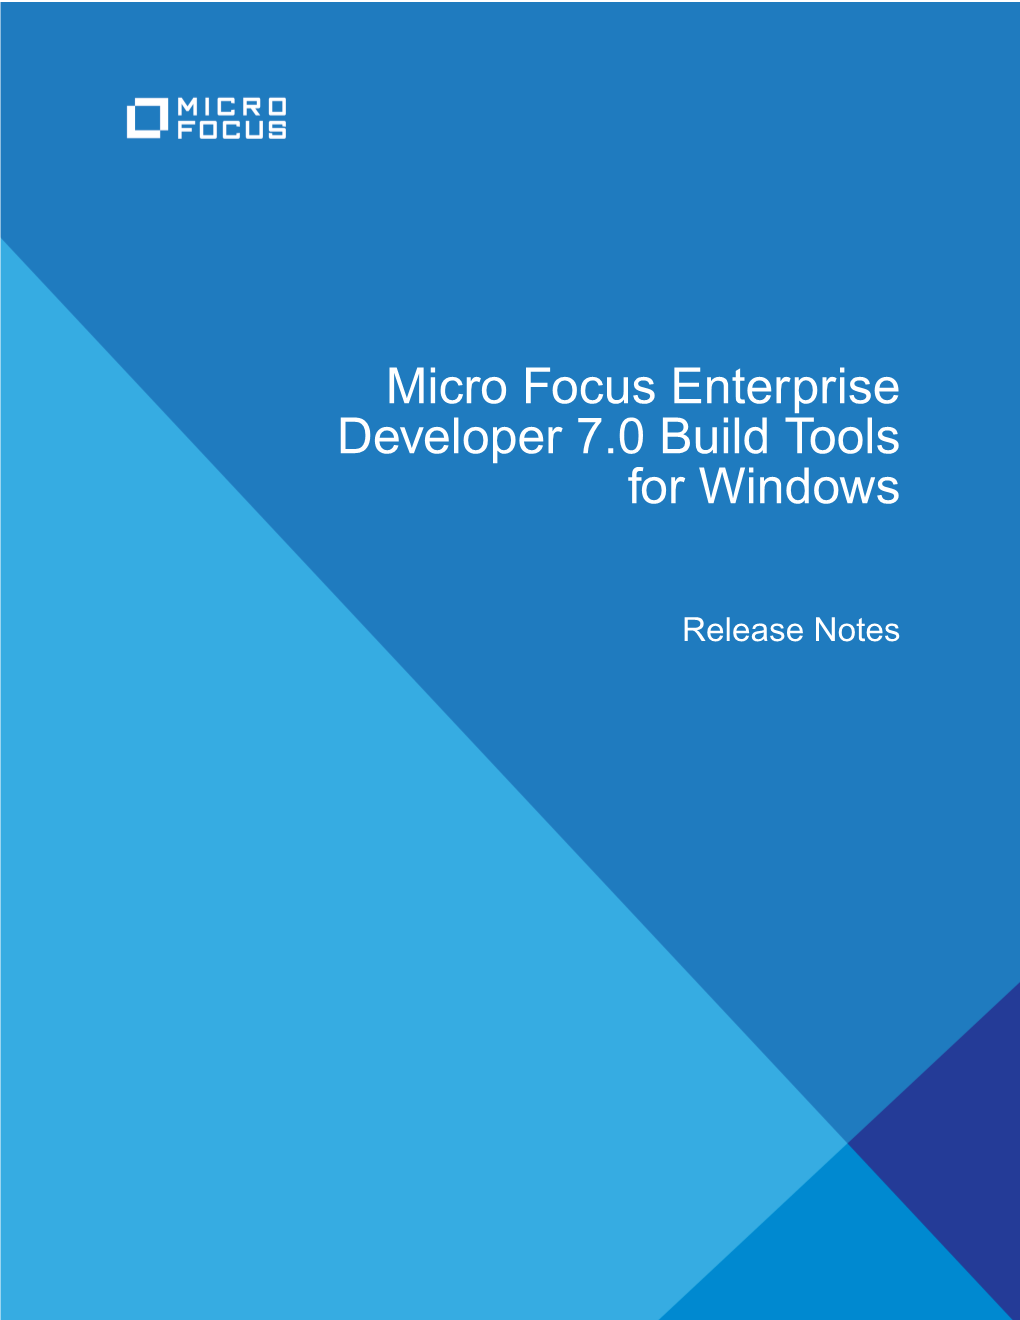 Micro Focus Enterprise Developer 7.0 Build Tools for Windows